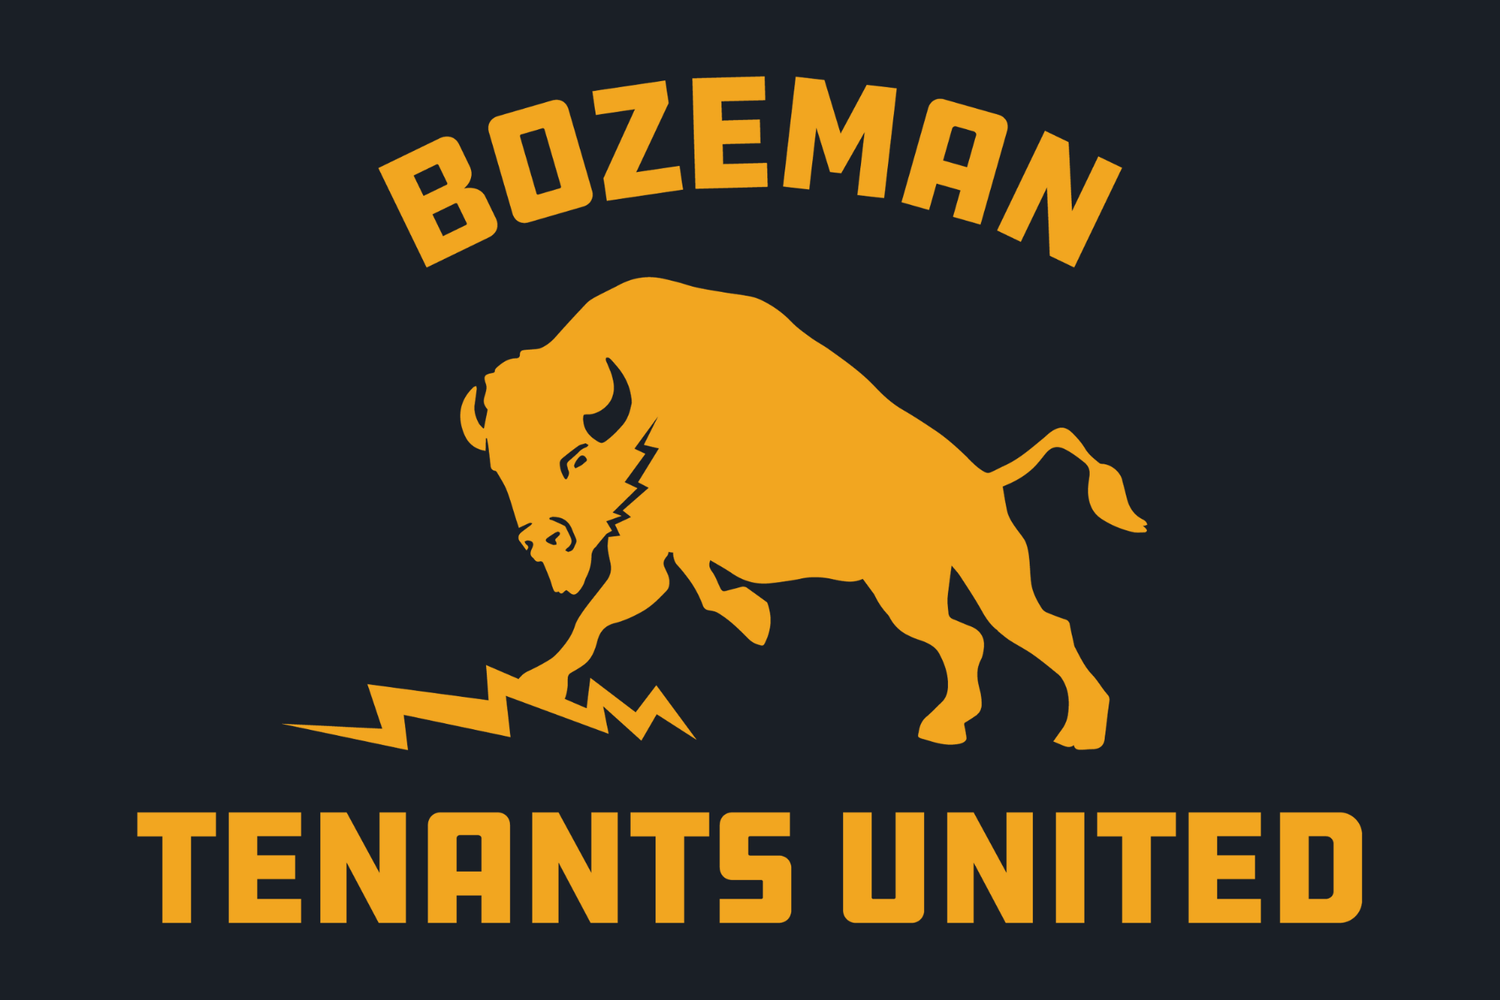 BOZEMAN TENANTS UNITED